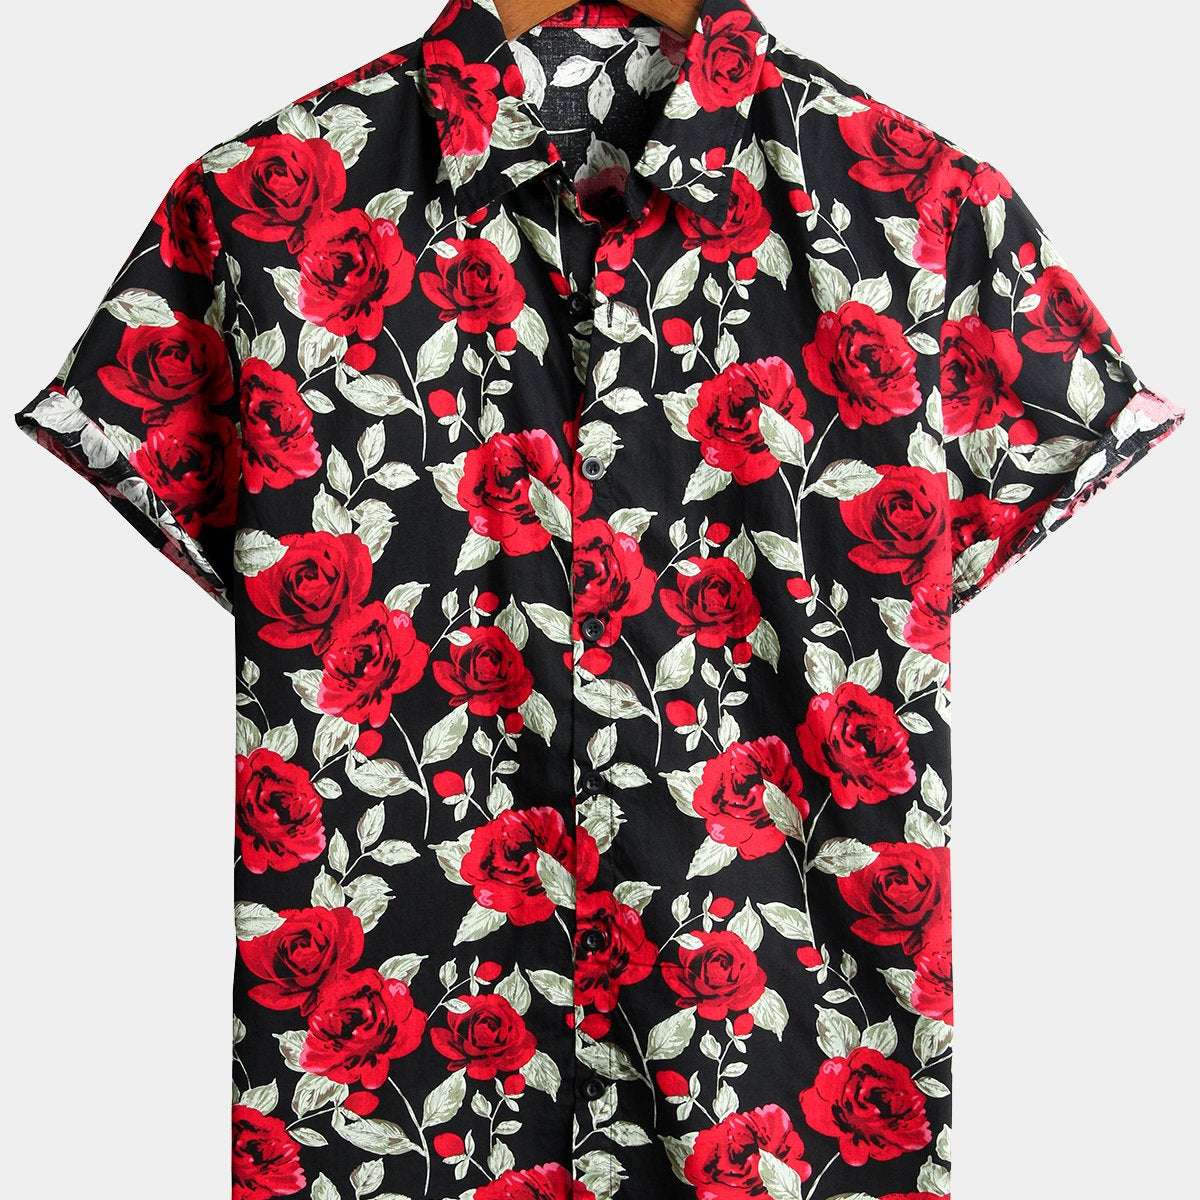 Men's Casual Holiday Rose Print Cotton Short Sleeve Shirt